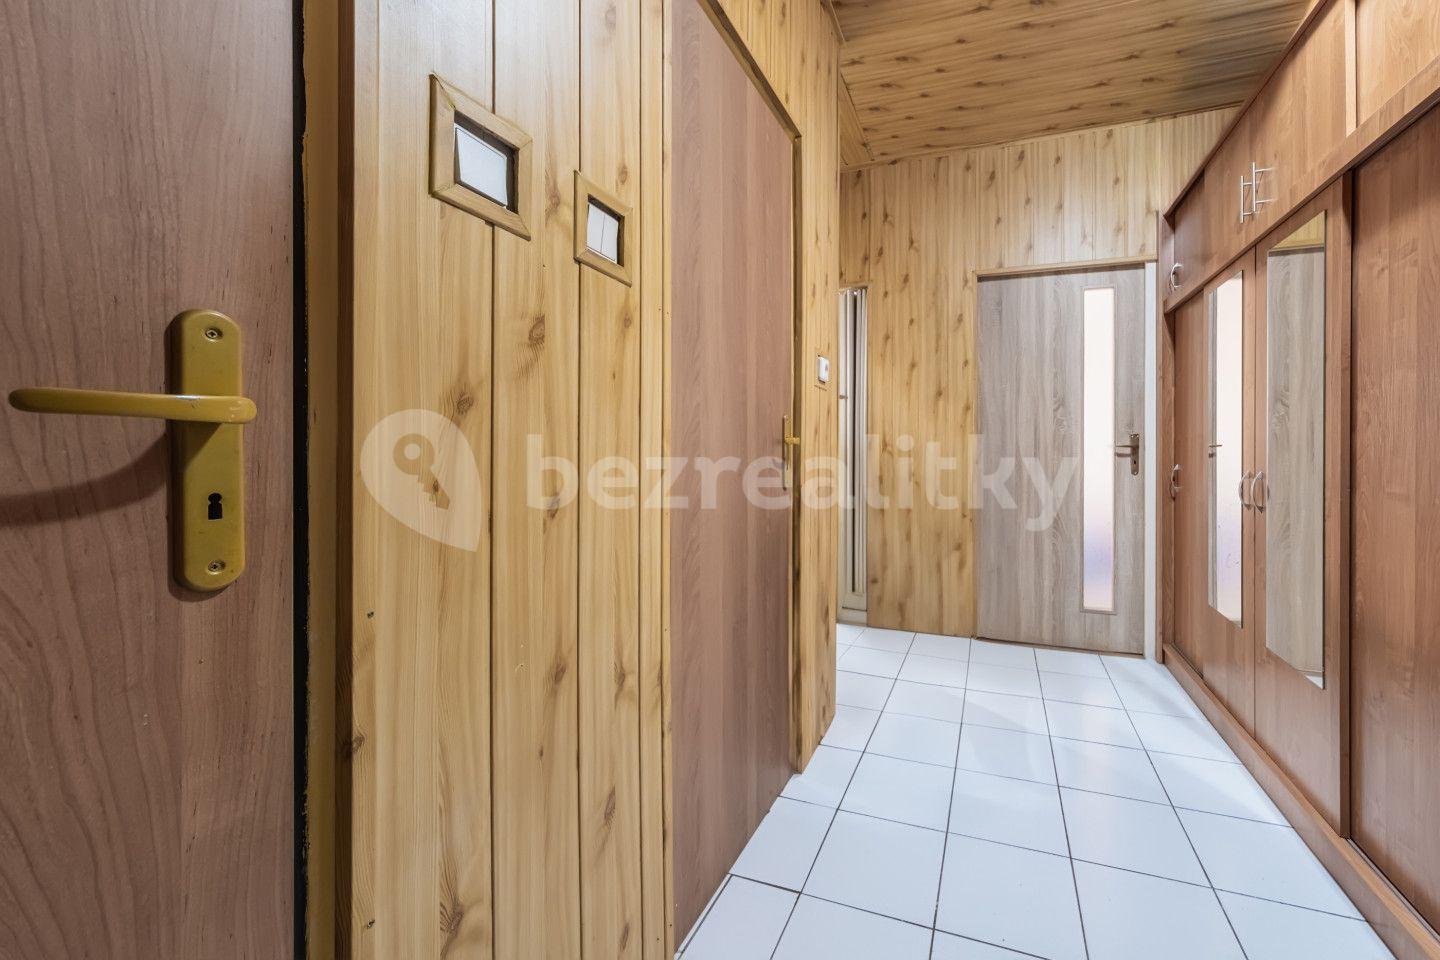 2 bedroom flat for sale, 52 m², Václavská, Chomutov, Ústecký Region